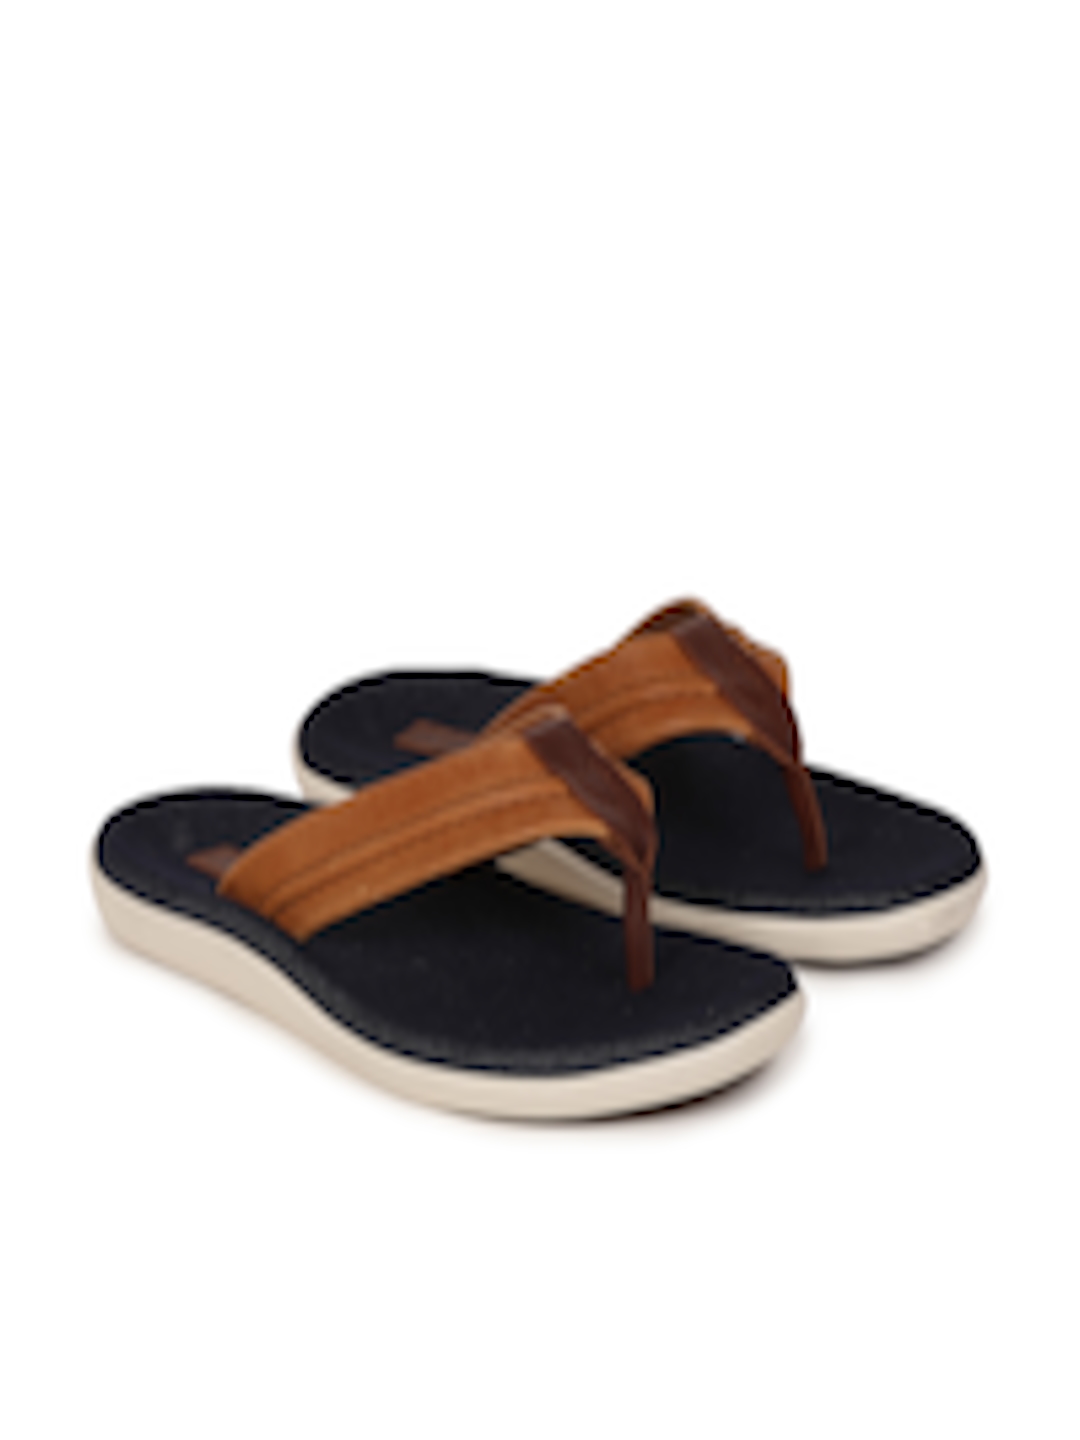 Buy ALDO Men Tan Brown Leather Sandals - Sandals for Men 1749333 | Myntra